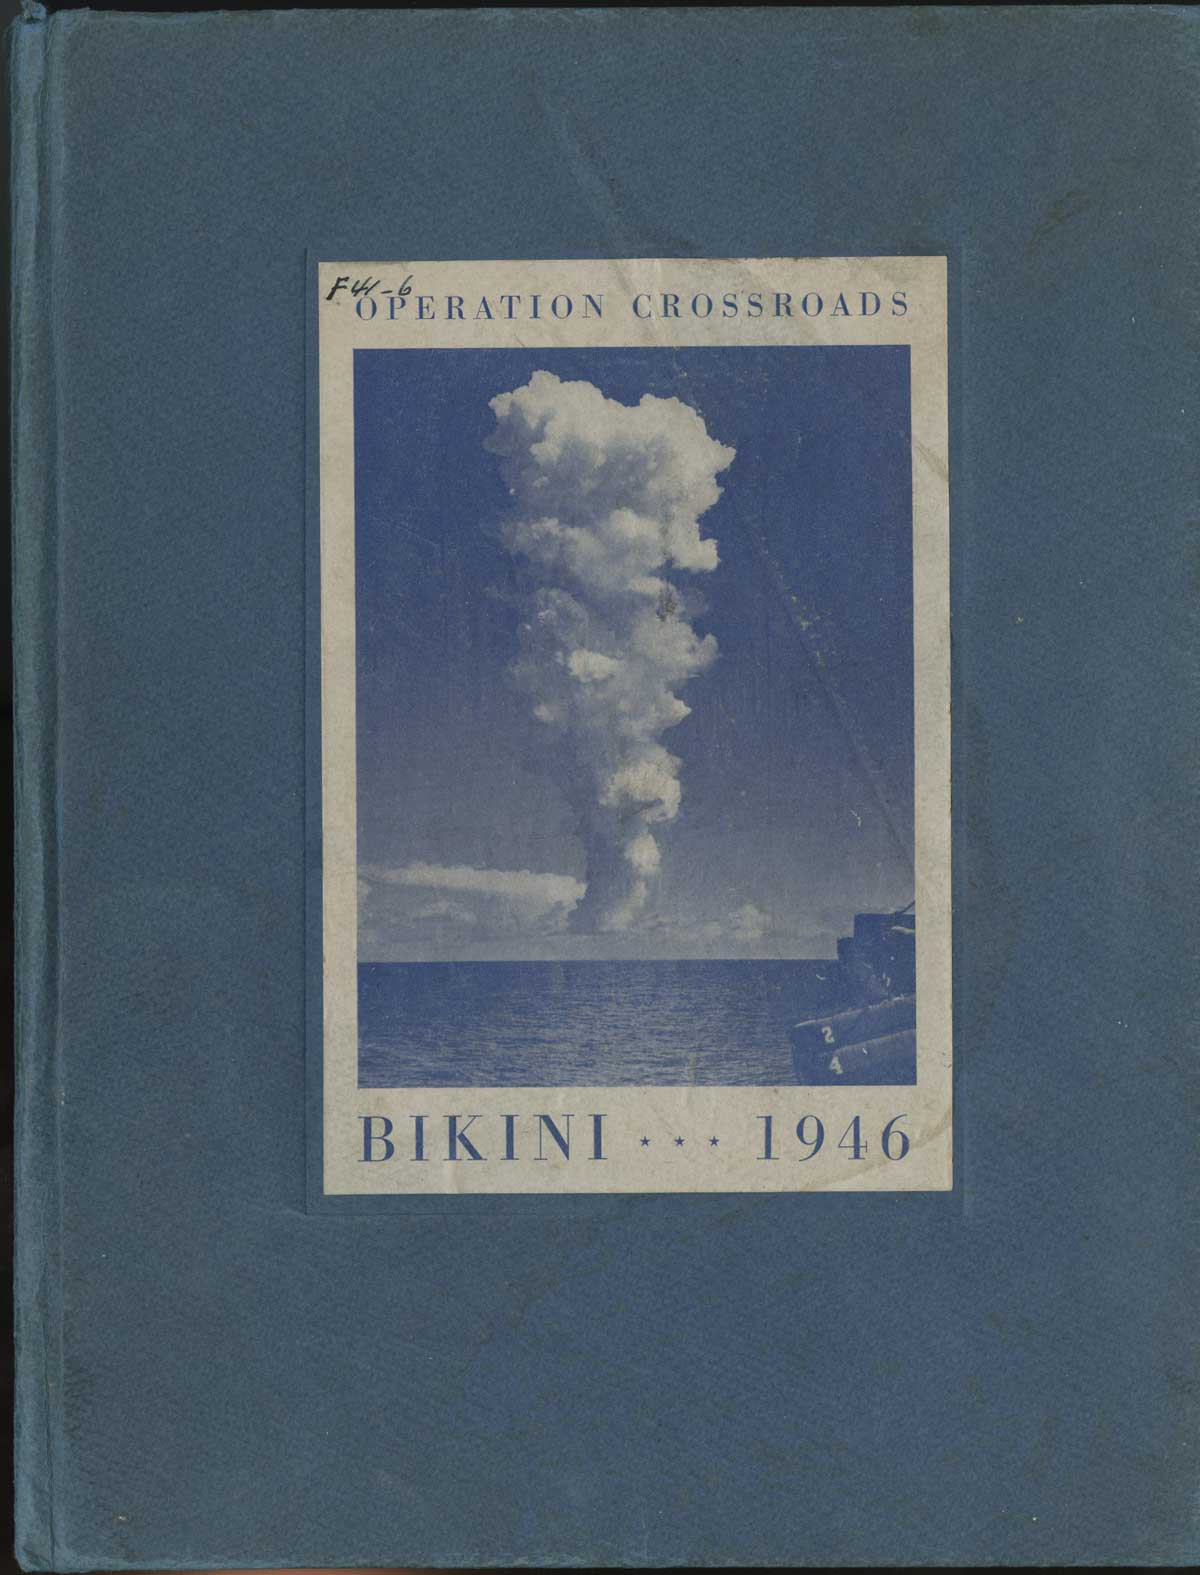 operation-crossroads-bikini-1946-cover.jpg